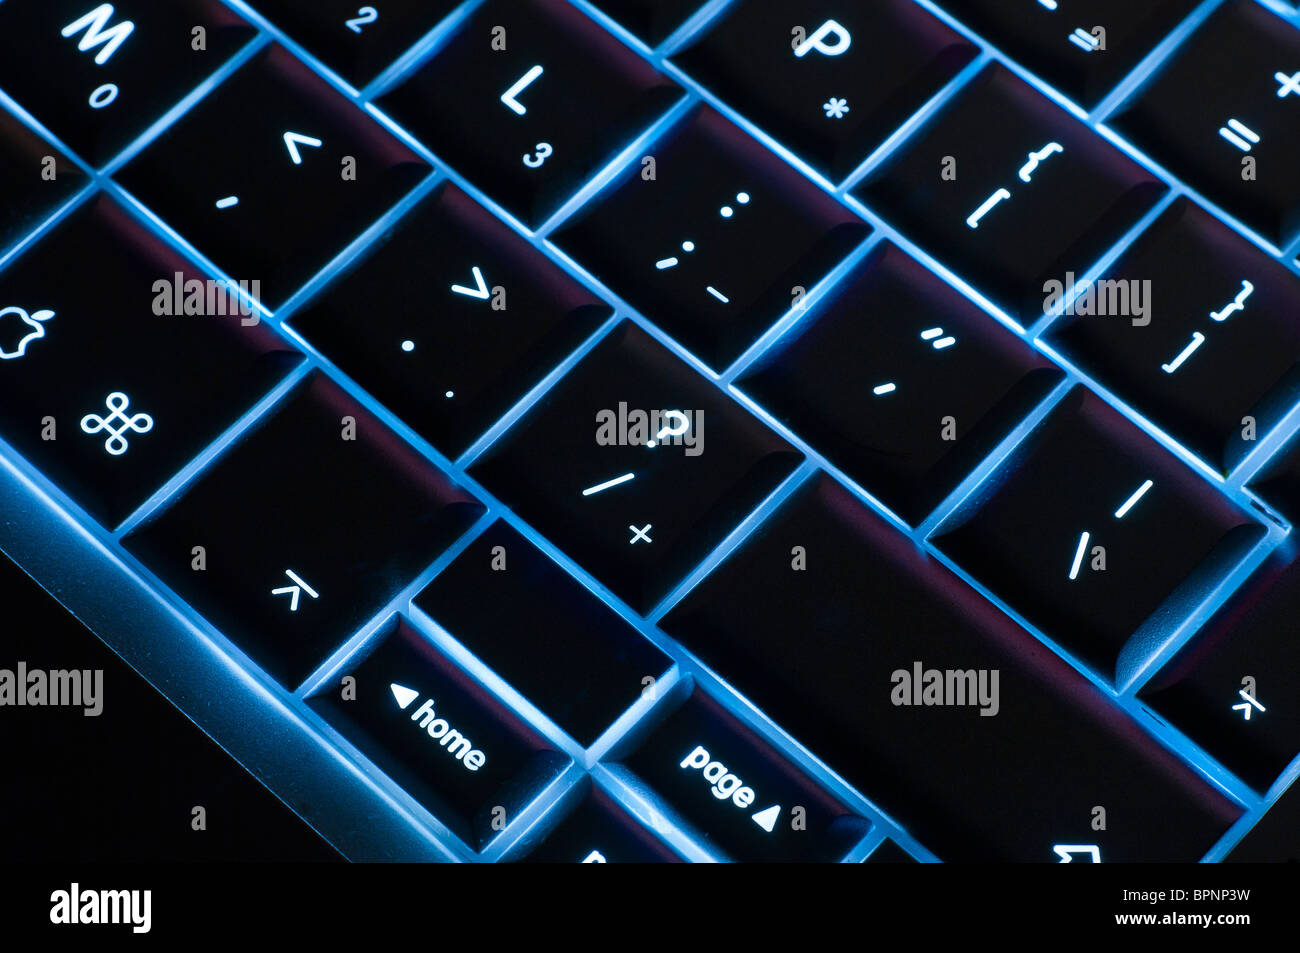 computer laptop keyboard close up detail of keys and symbols Stock Photo